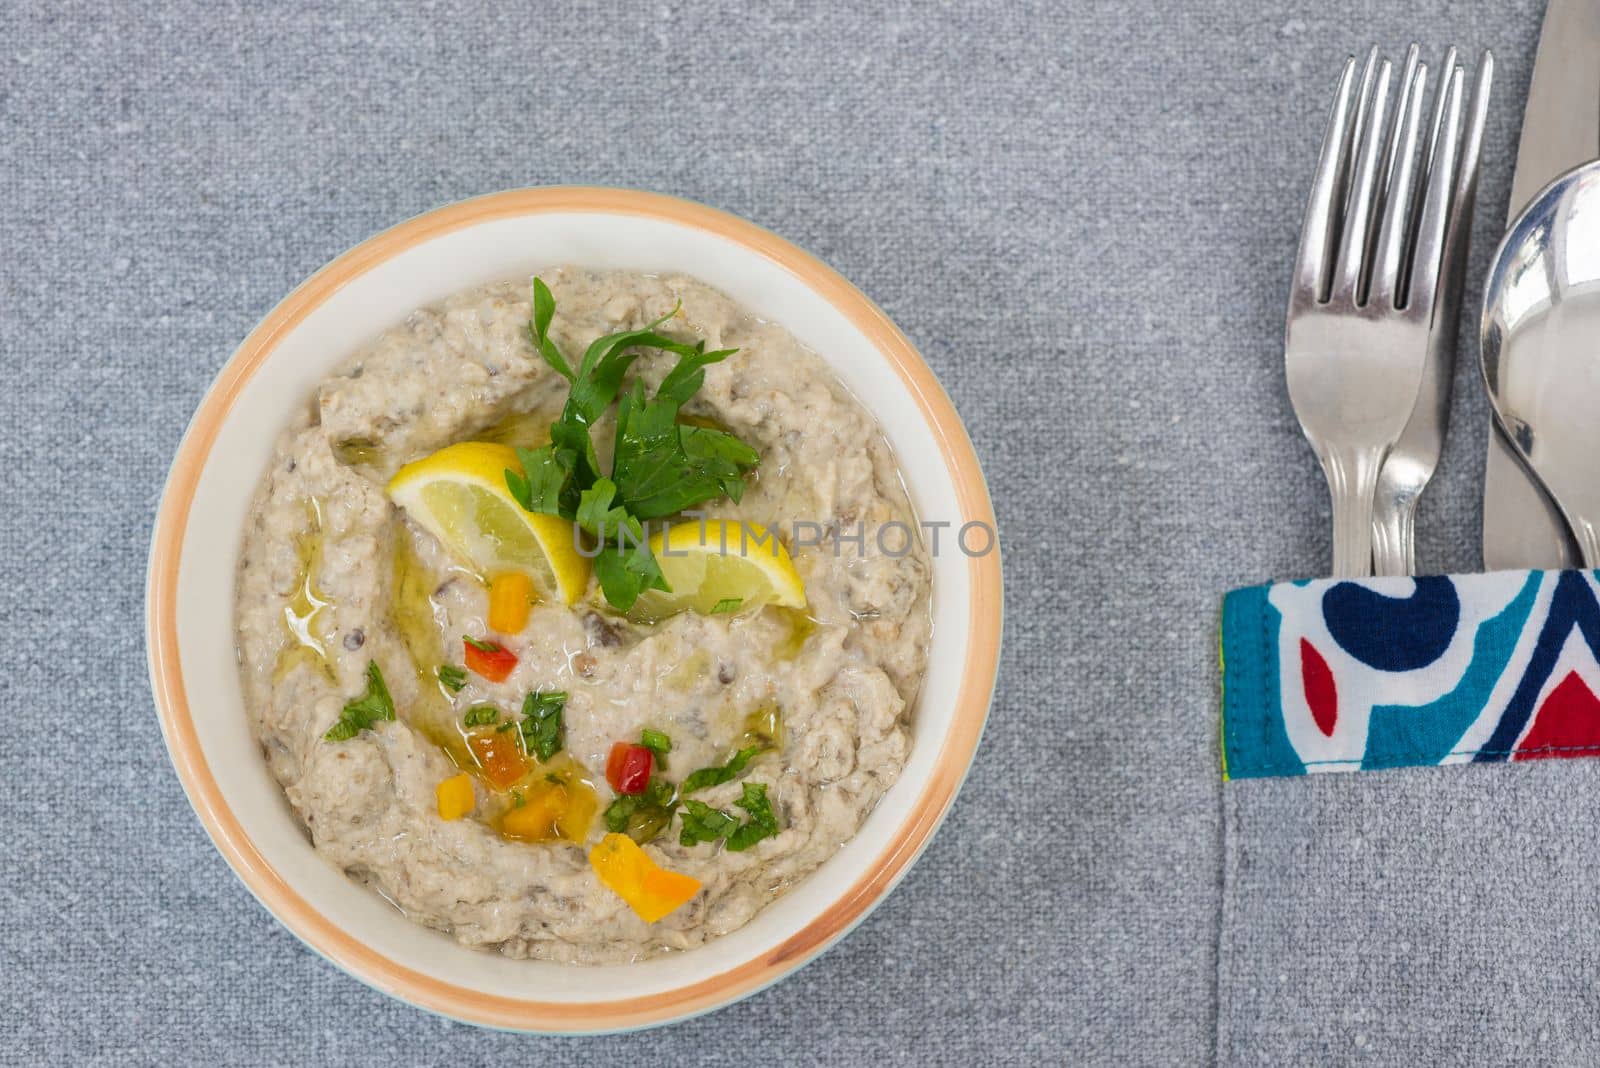 Hummus a la carte appetiser meal side dish dip in a bowl with lemon garnish